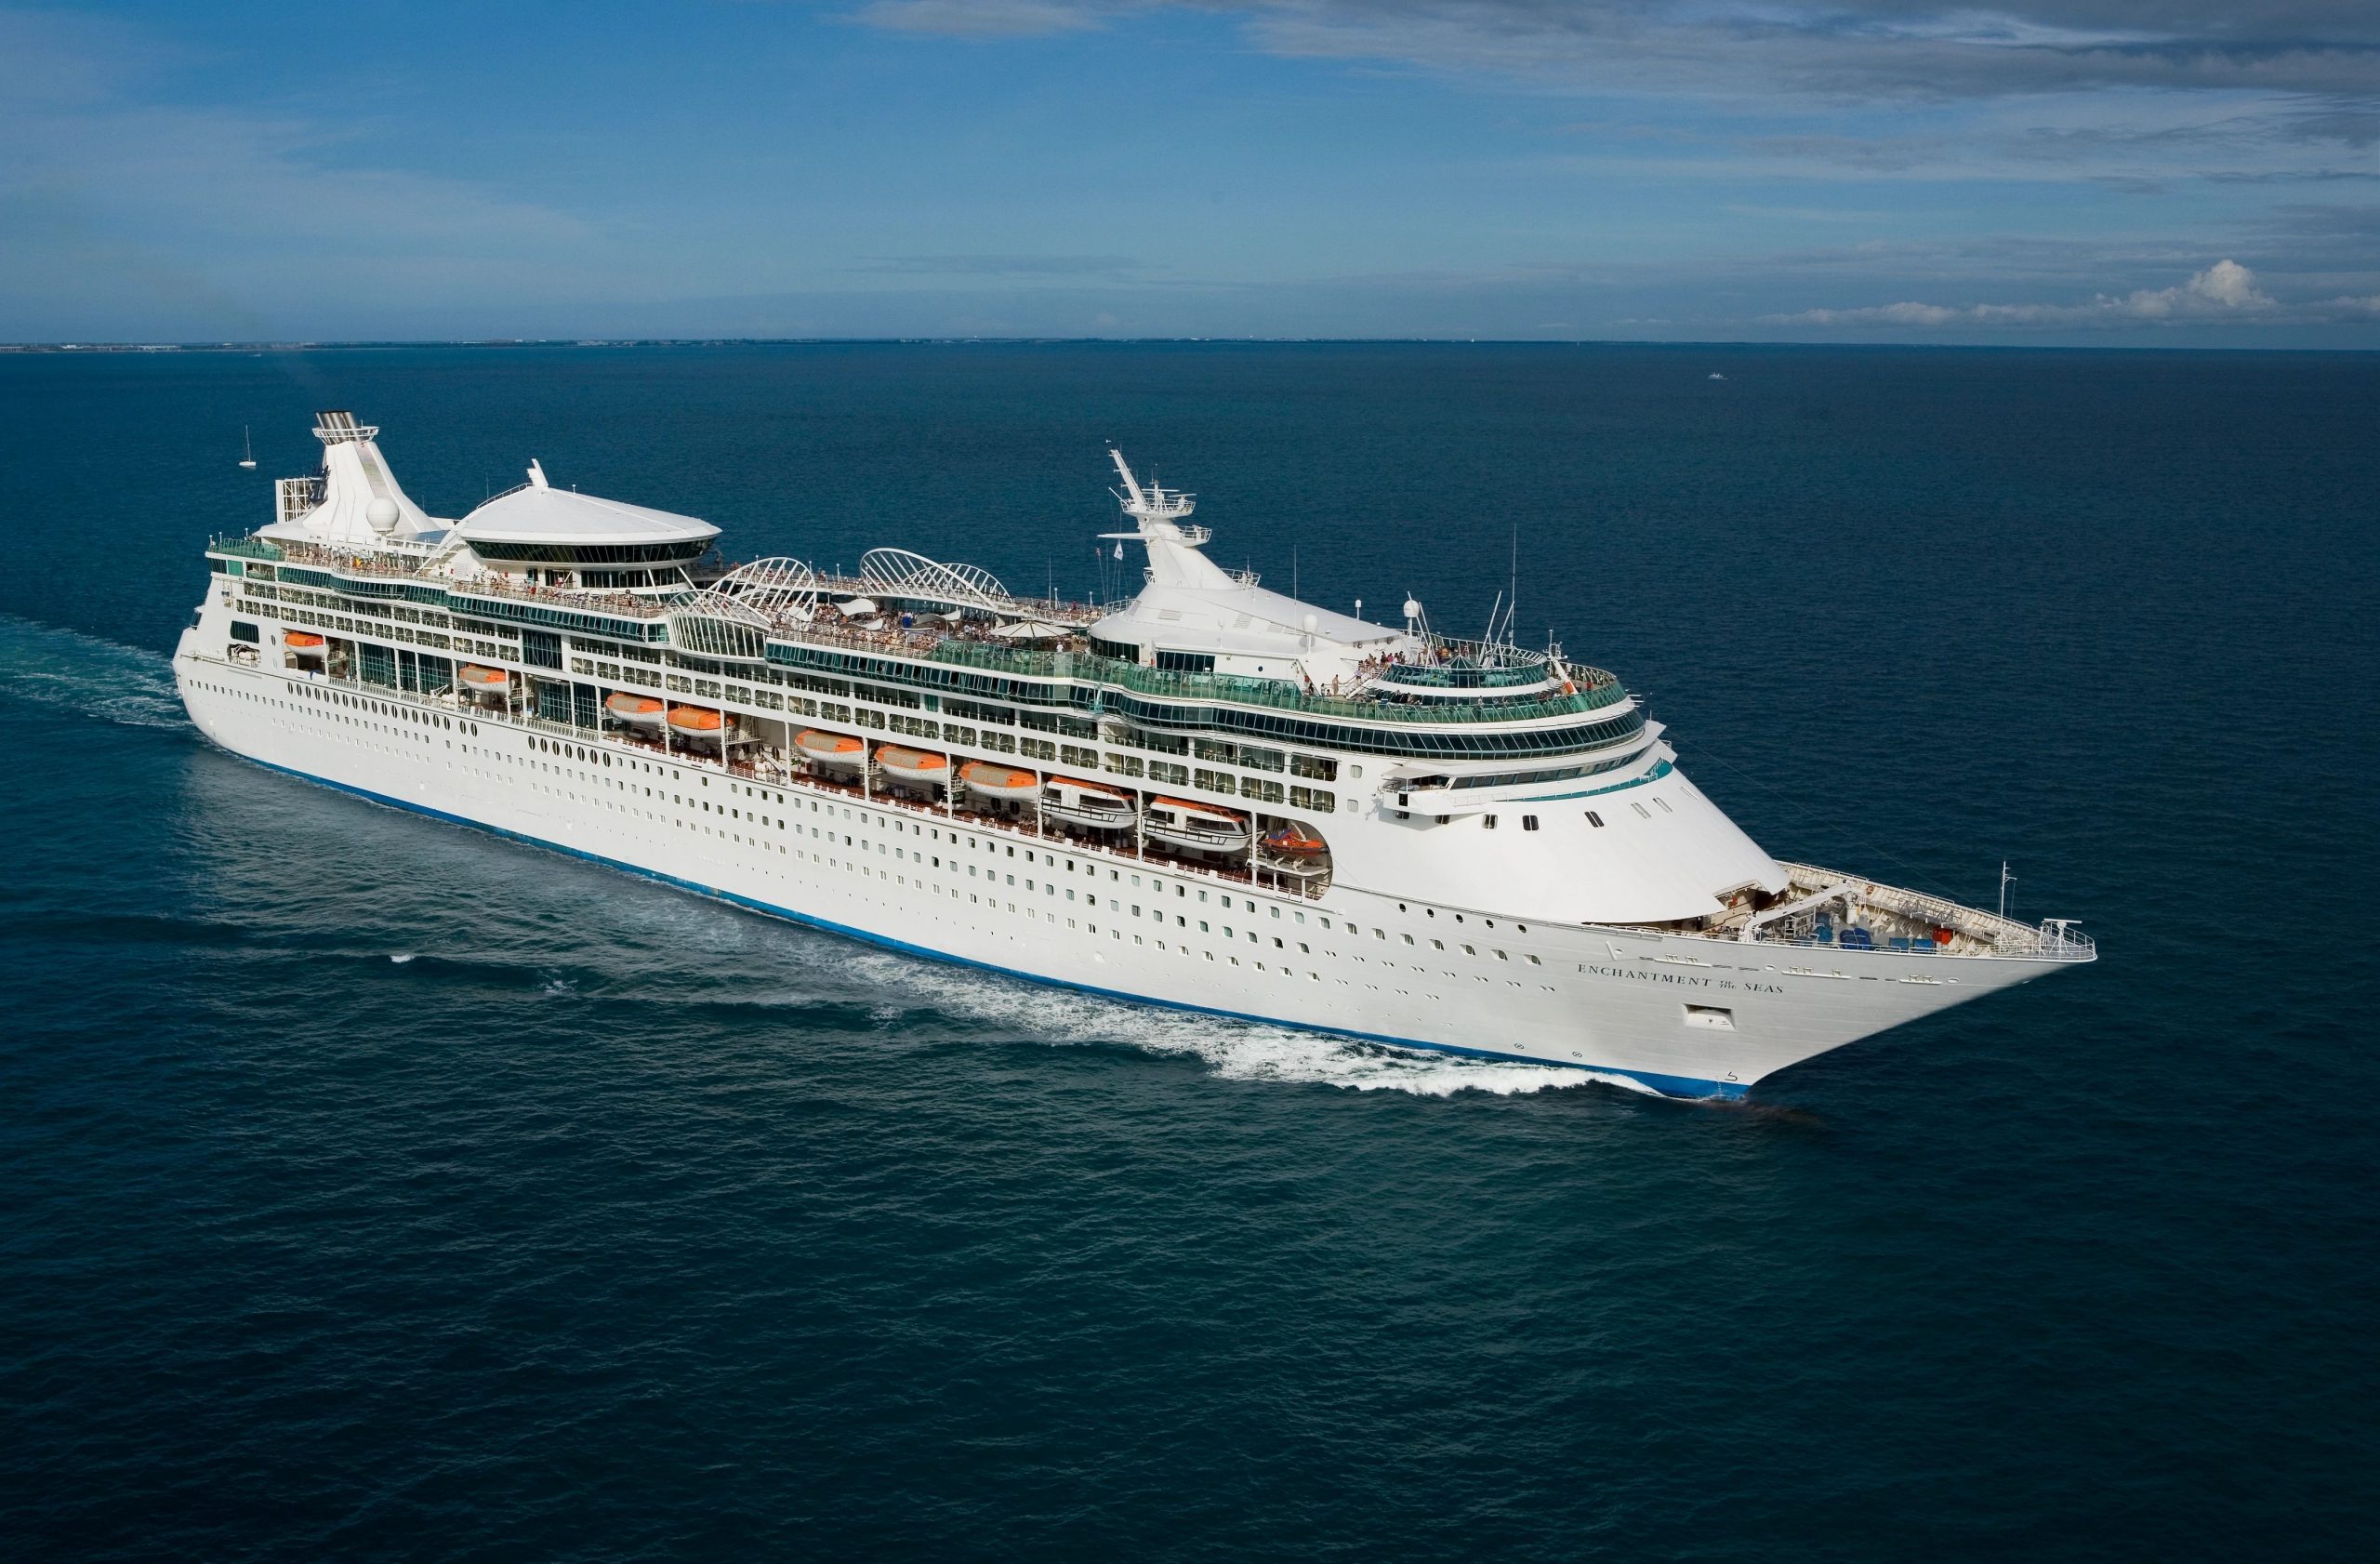 Cruise Ships – Introducing Royal Caribbean’s Vision Class Cruise Ships